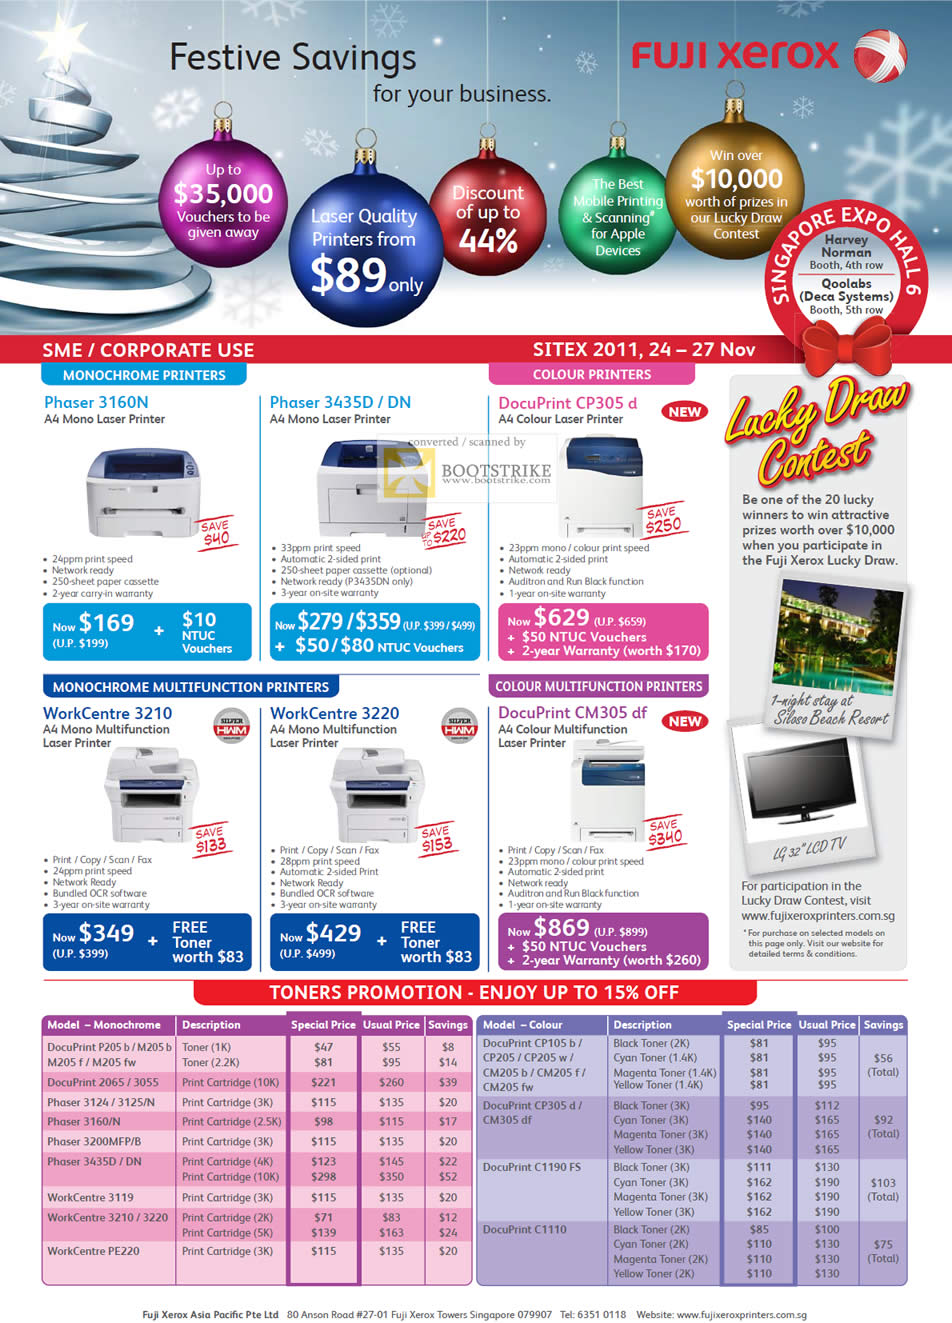 SITEX 2011 price list image brochure of Fuji Xerox Laser Printers Phase 3160N, 3435D DN, DocuPrint CP305 D, WorkCentre 3210, 3220, DocuPrint CM305 Df, Ink Toner Print Cartridge